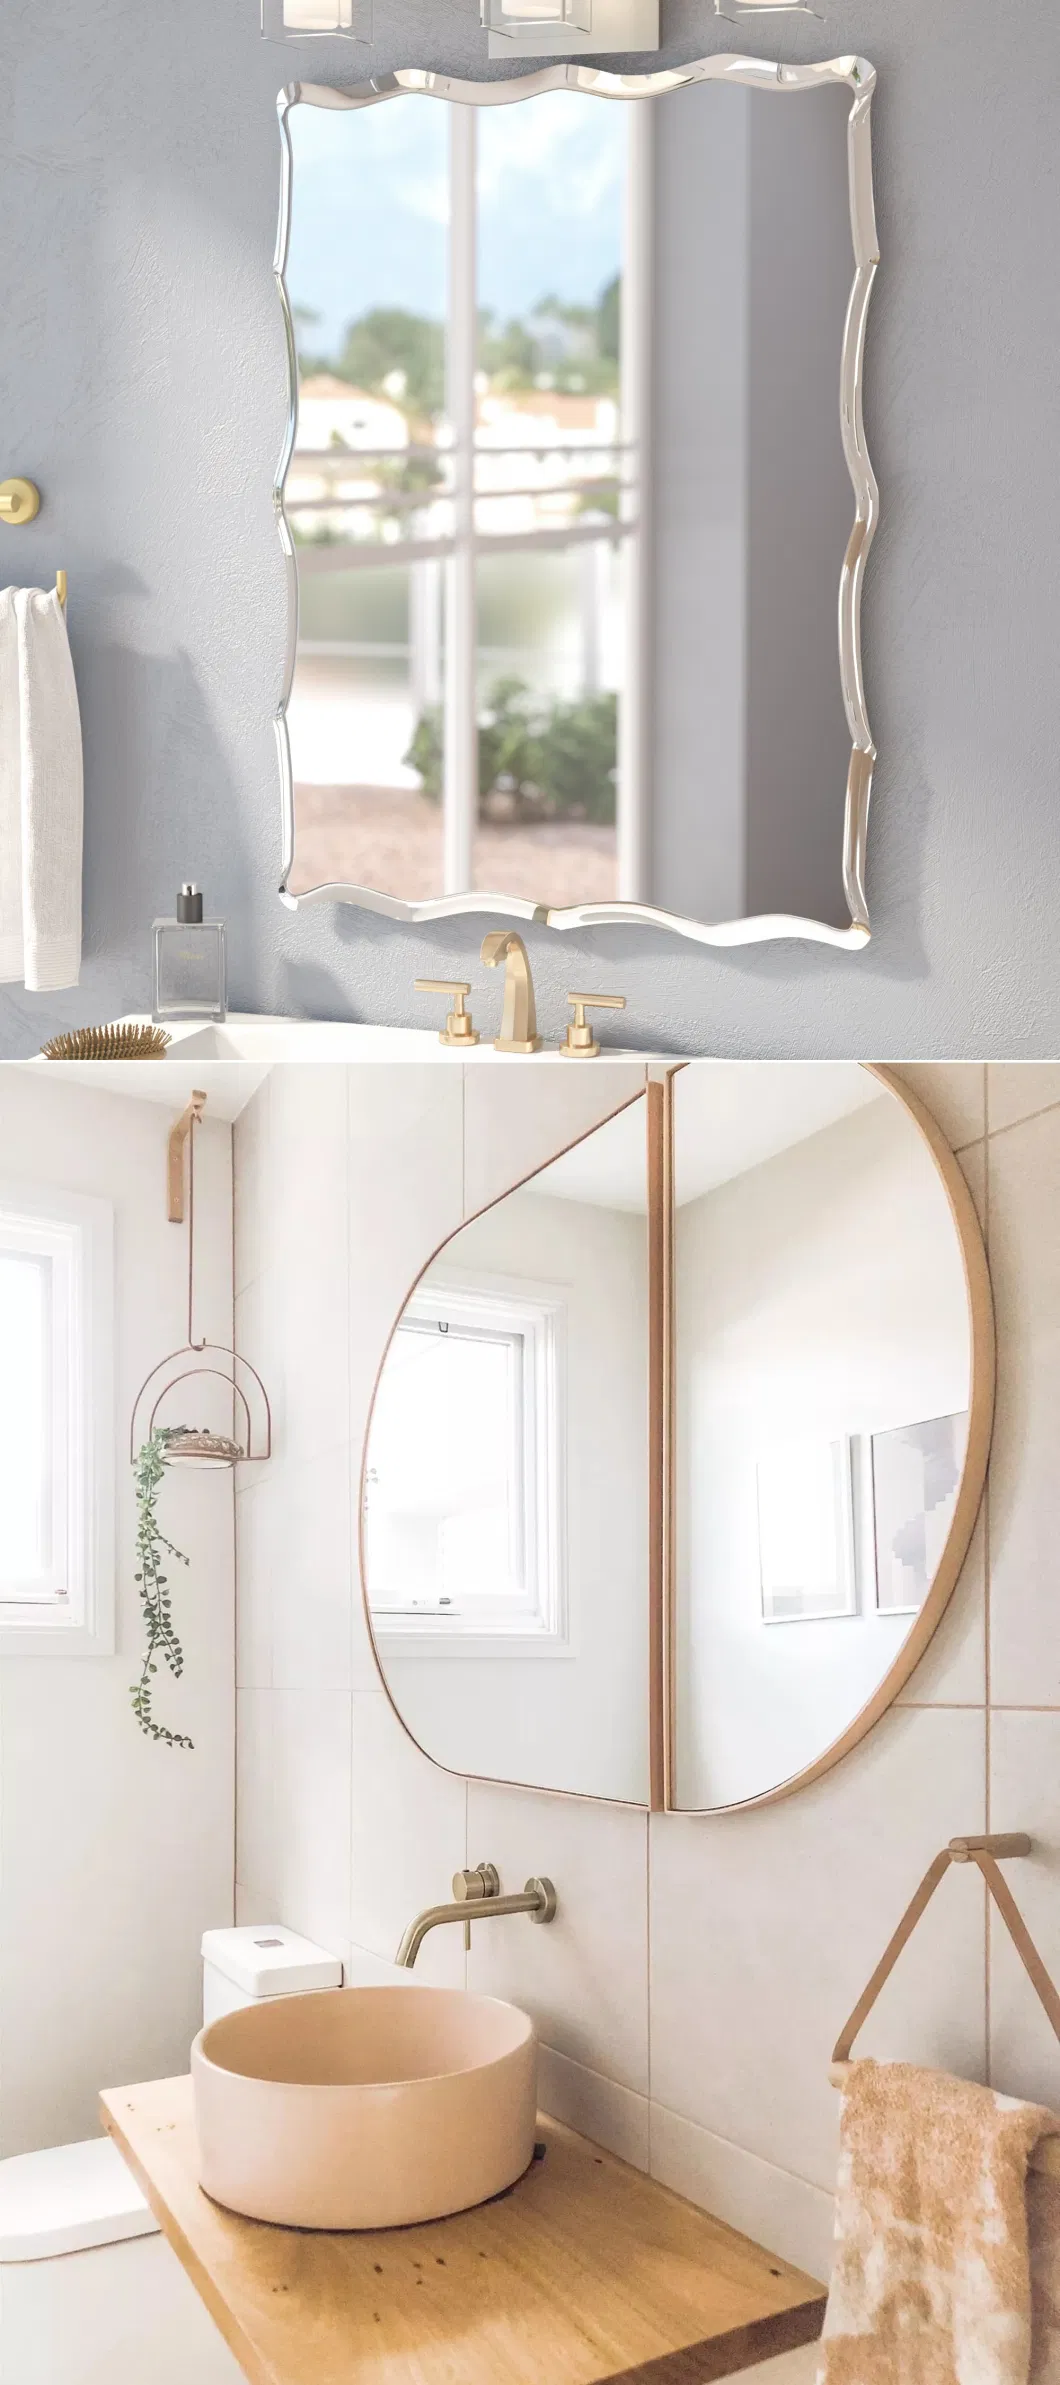 ORTONBATH New Design Matt Black Home Smart Wall Mounted Nonled Mirror Bathroom Designer Art Mirror with Steel Frame